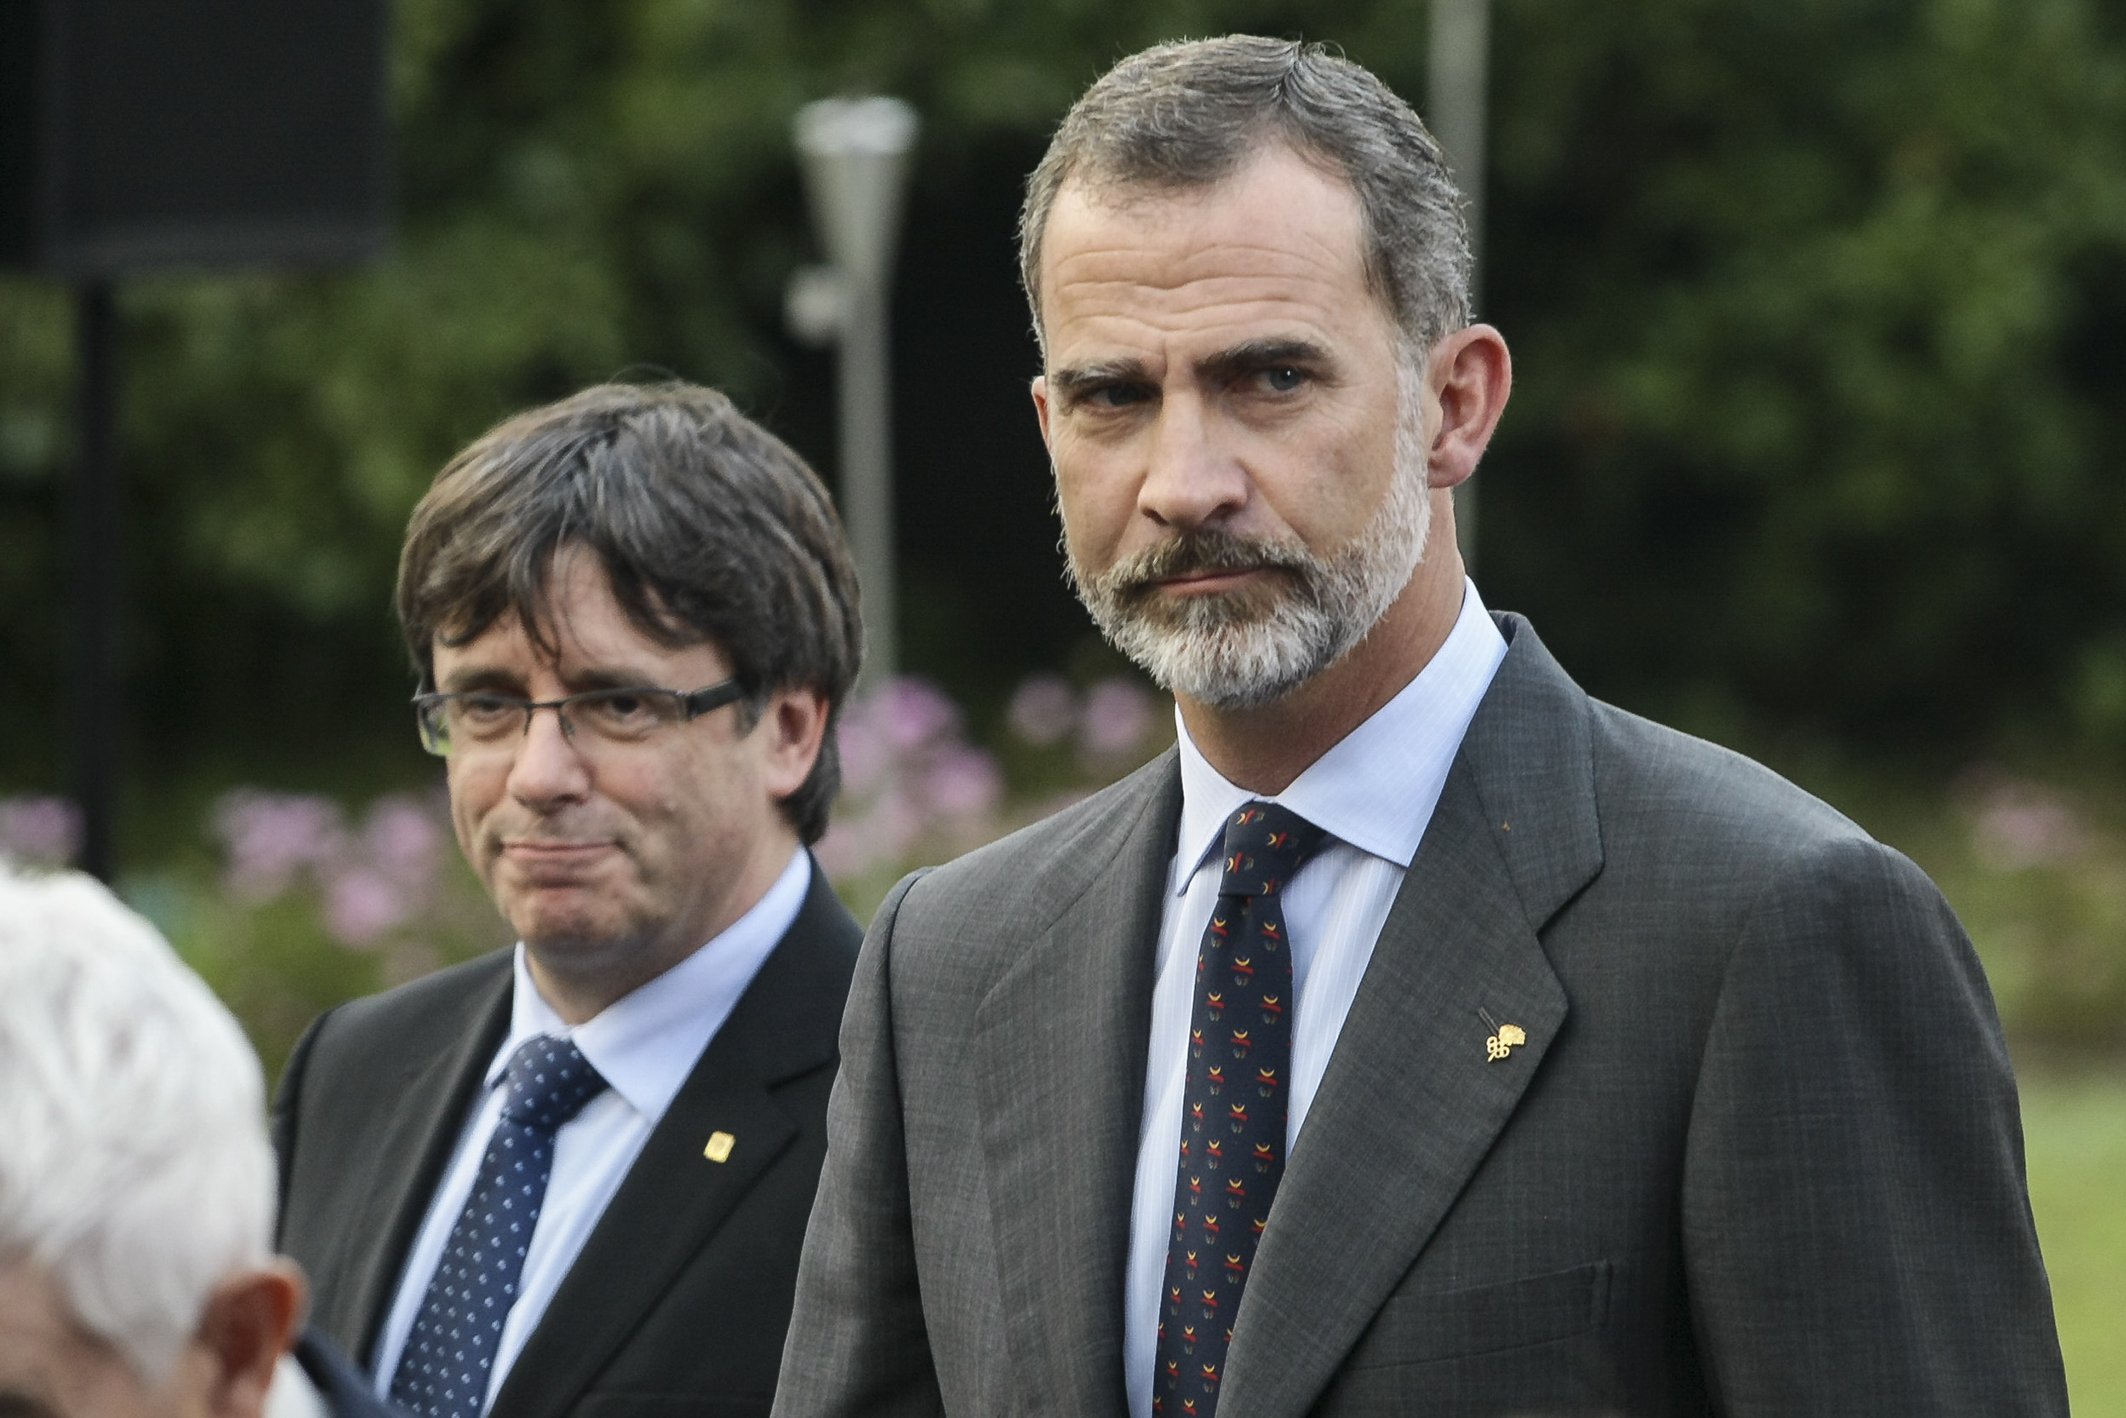 El retret de Puigdemont al Rei: "No ho oblidarem mai"